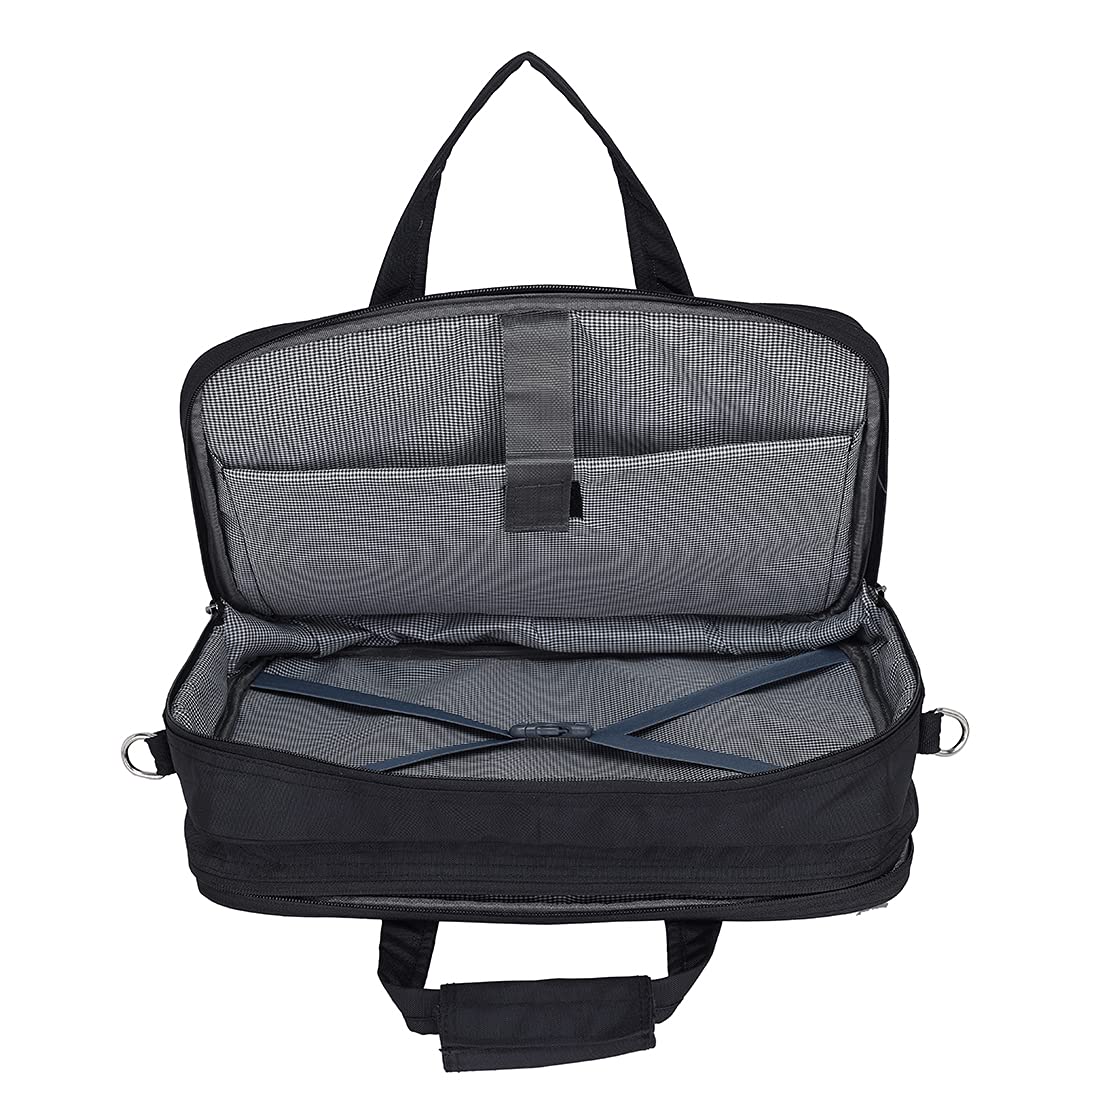 Amazon.com: 15 15.4 15.6 16 16.2 Inch Laptop Bag with Straps, Shoulder Bag  for Women Men, Handle Sleeve for  Chromebook/MacBook/Acer/Asus/HP/Dell/Surface Laptop, Business Travel Bag  -Black : Electronics